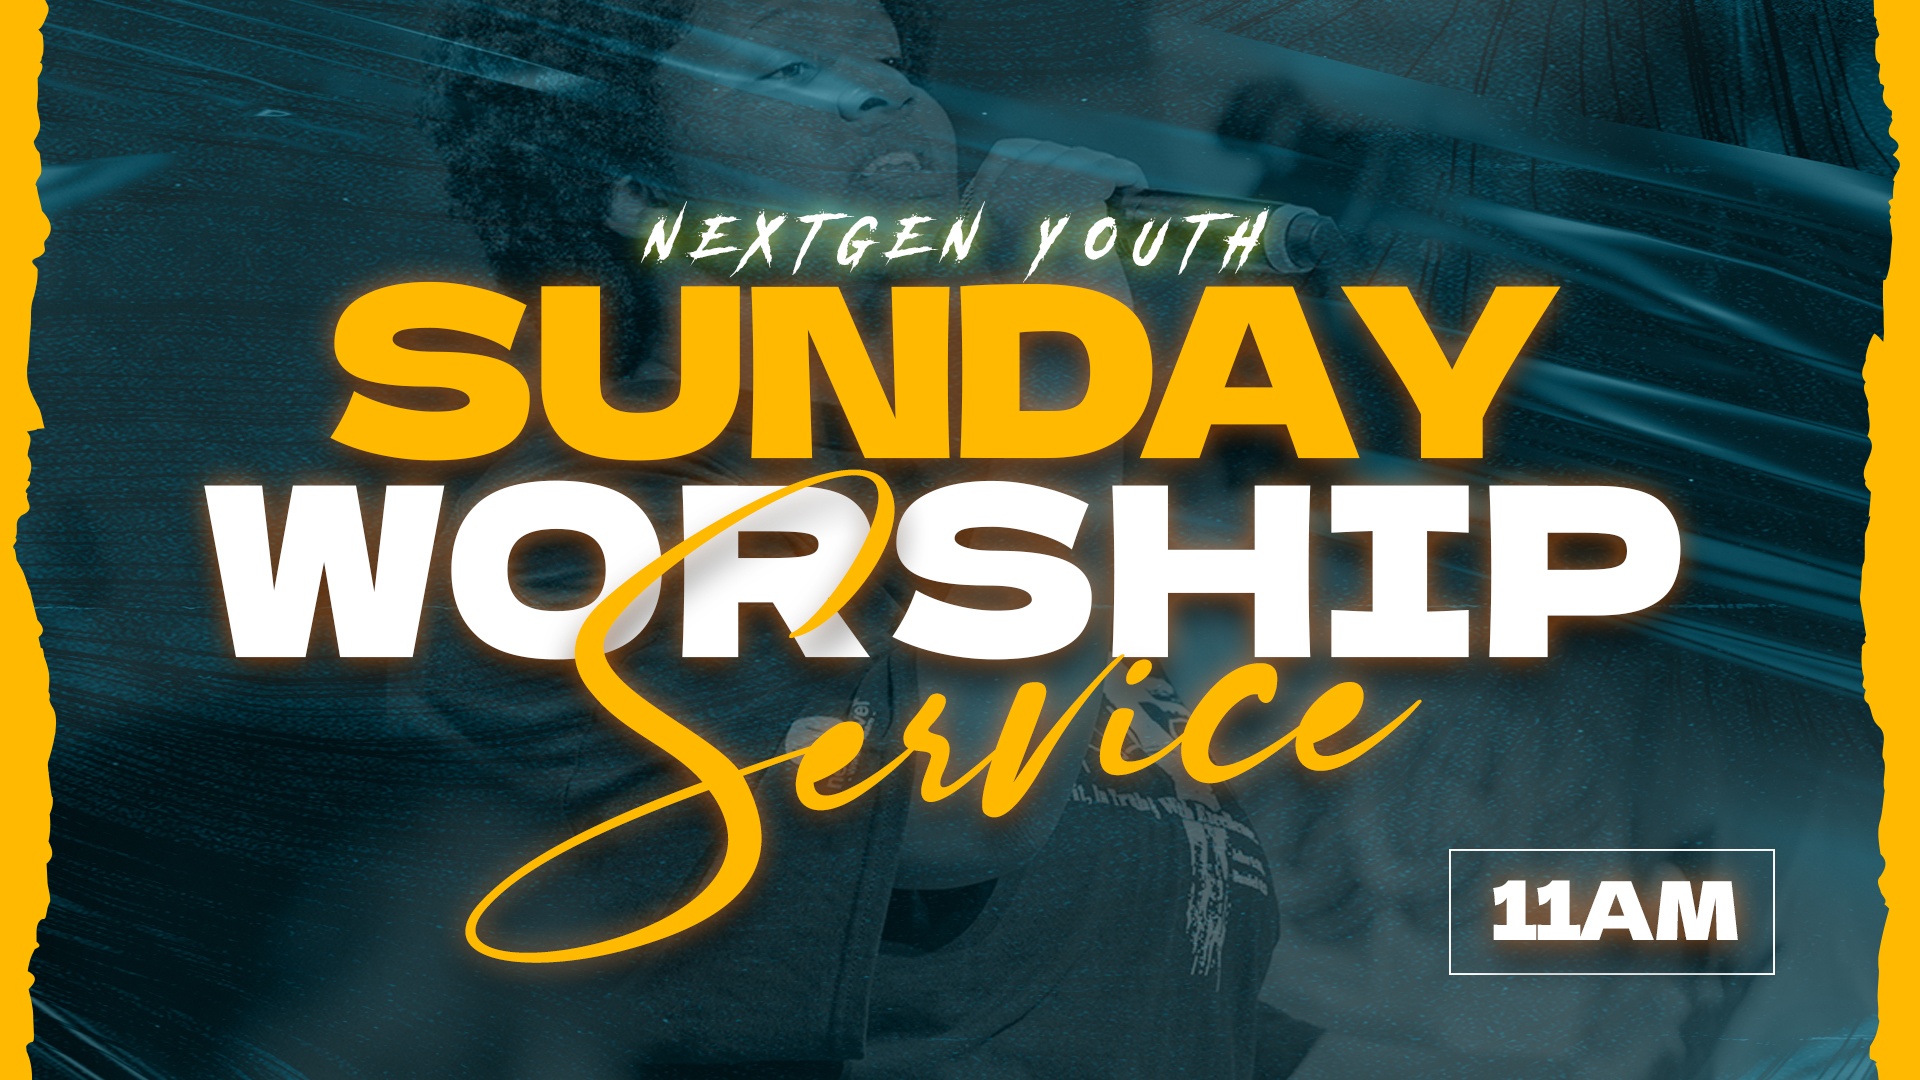 NextGen Youth: Sunday Worship Service - Oak Cliff Bible Fellowship